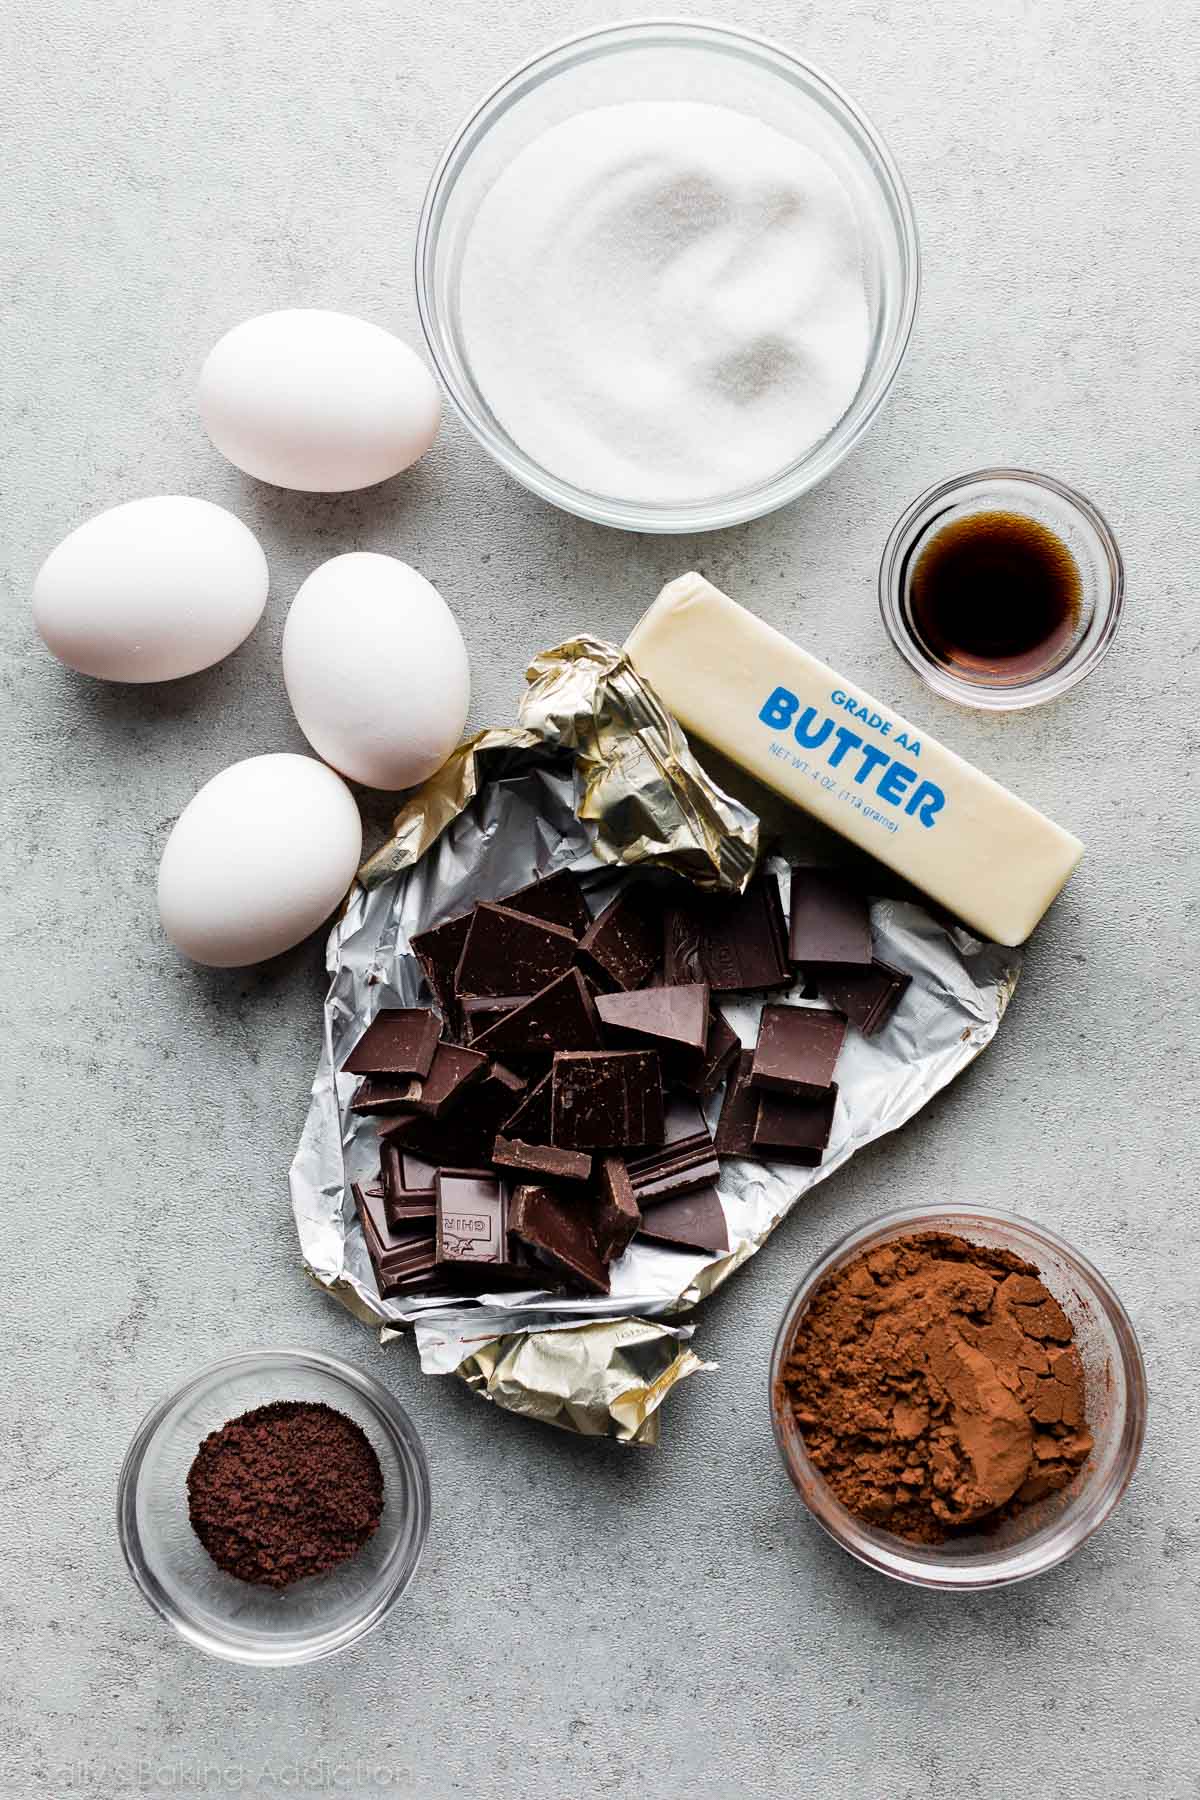 butter, chocolate, eggs, sugar, and cocoa powder